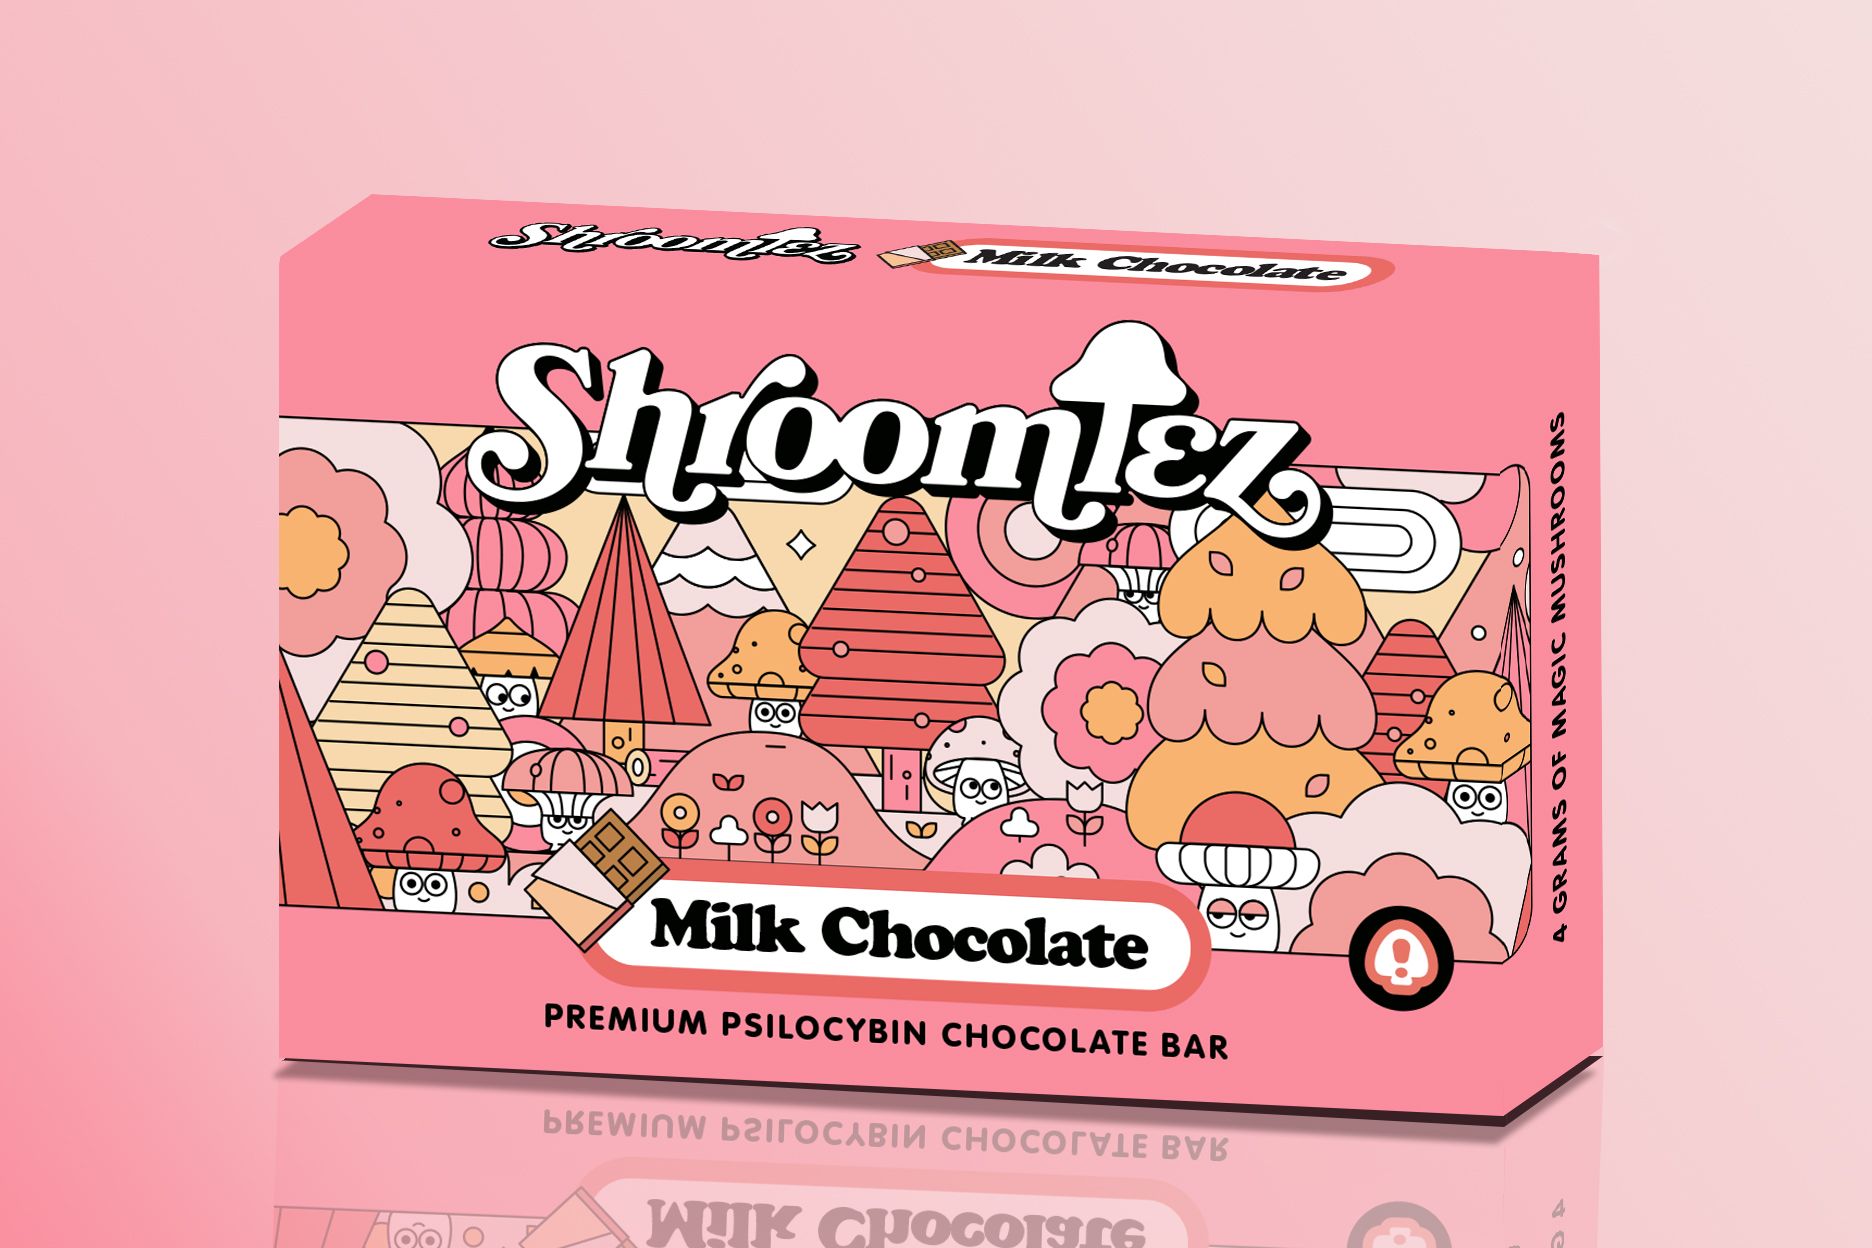 Shroomiez best psilocybin mushroom chocolate bar pink box packaging